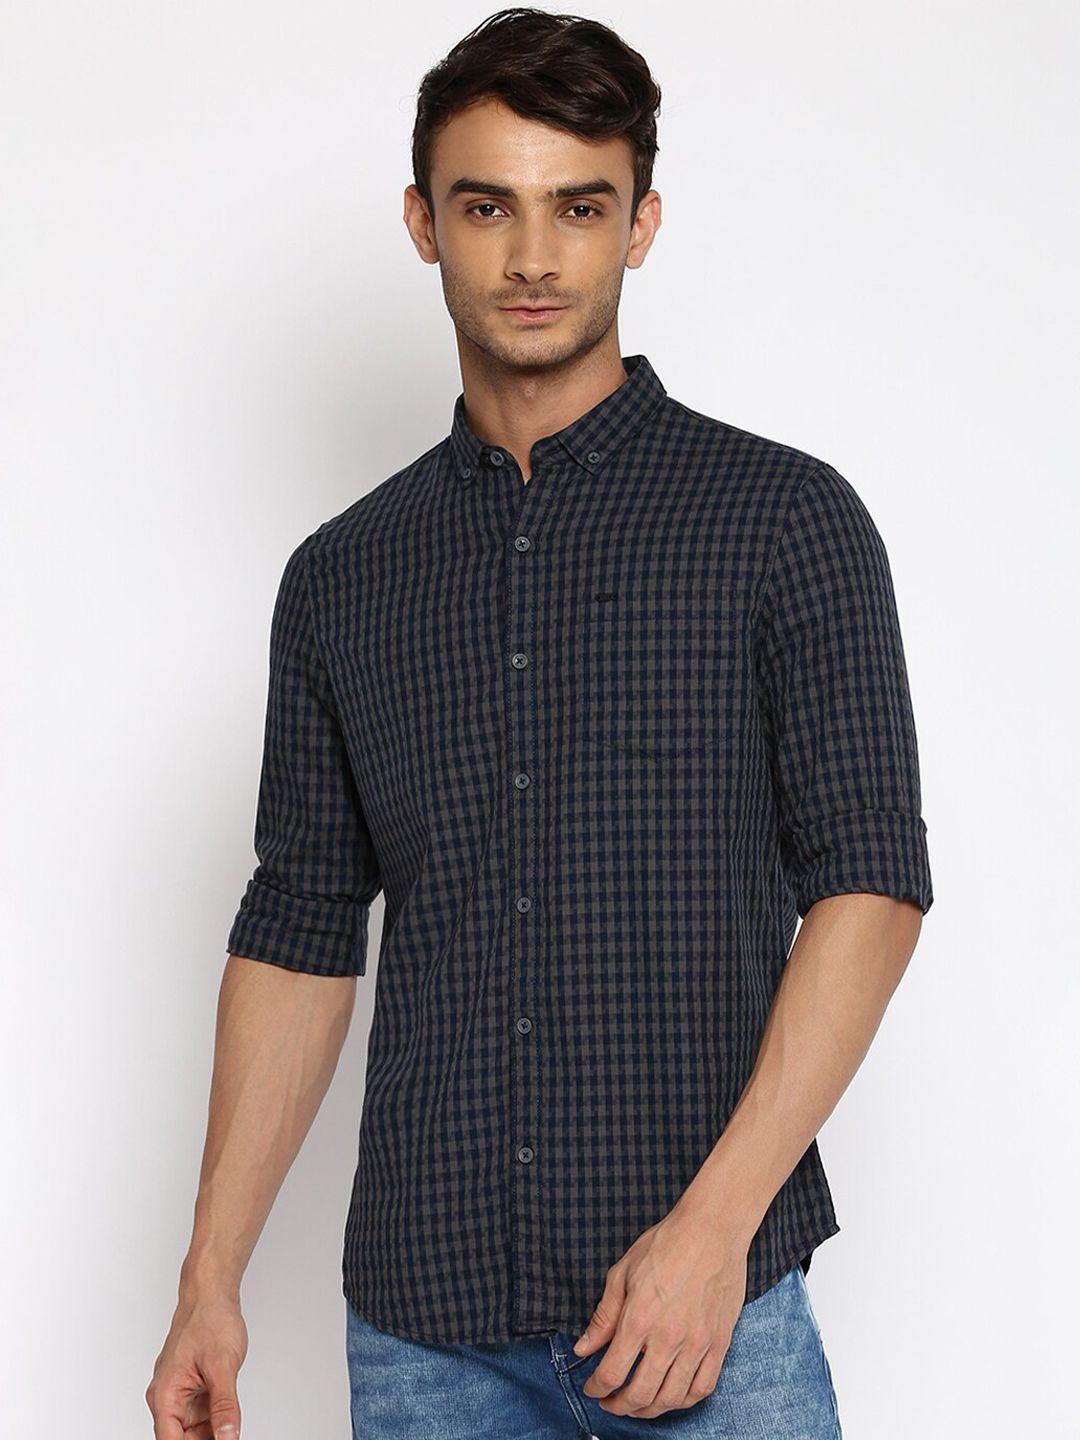 lee men blue & grey classic slim fit grid tattersall checks cotton casual shirt